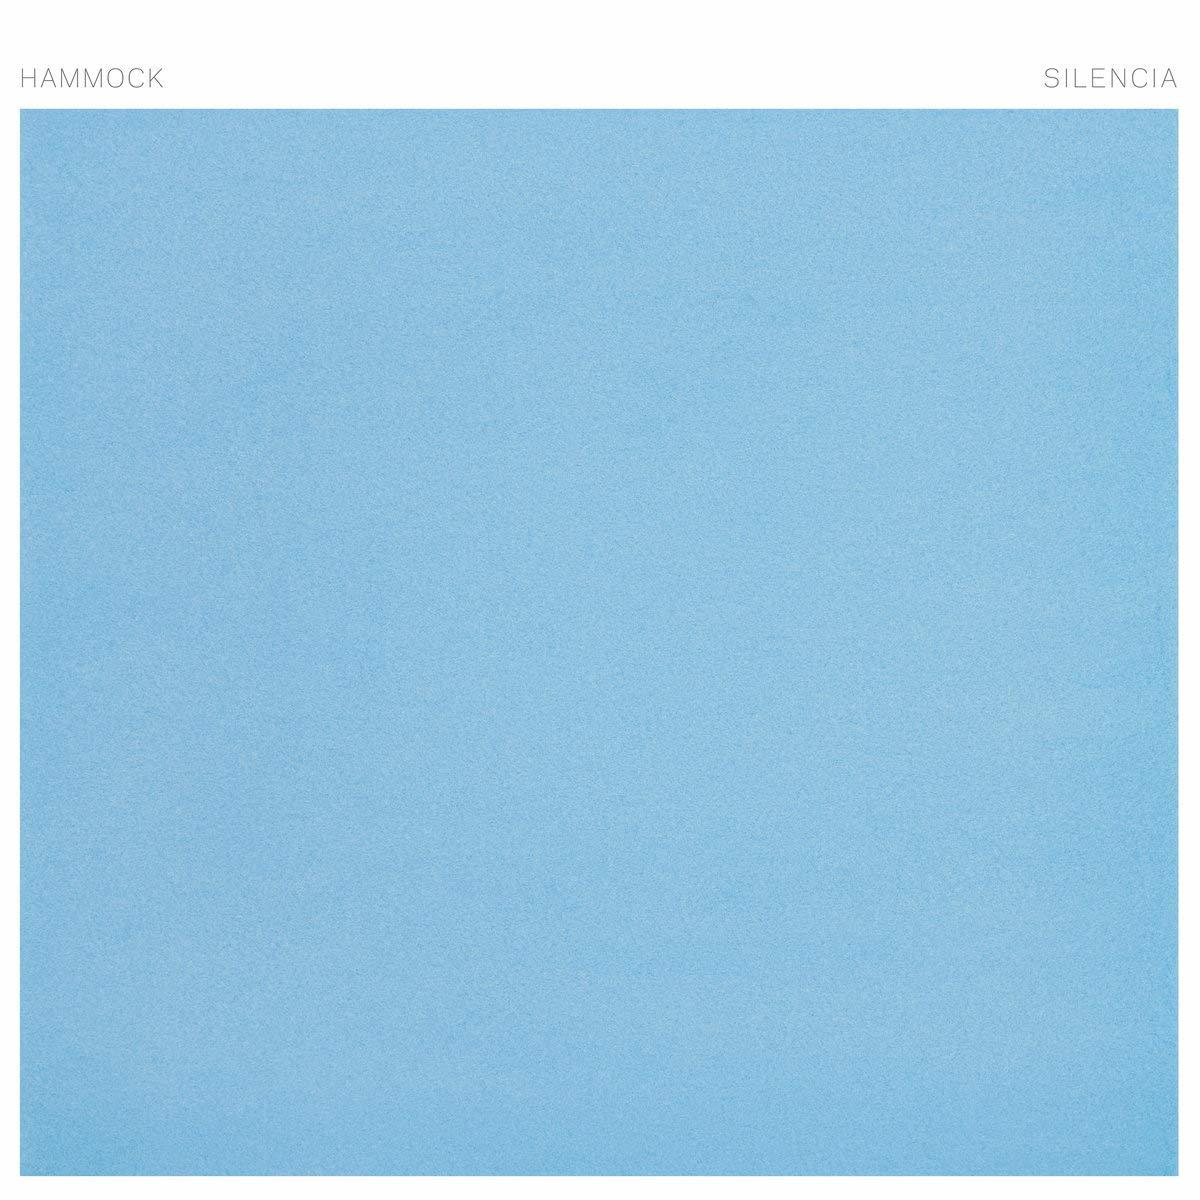 Hammock - Silencia - (CD)